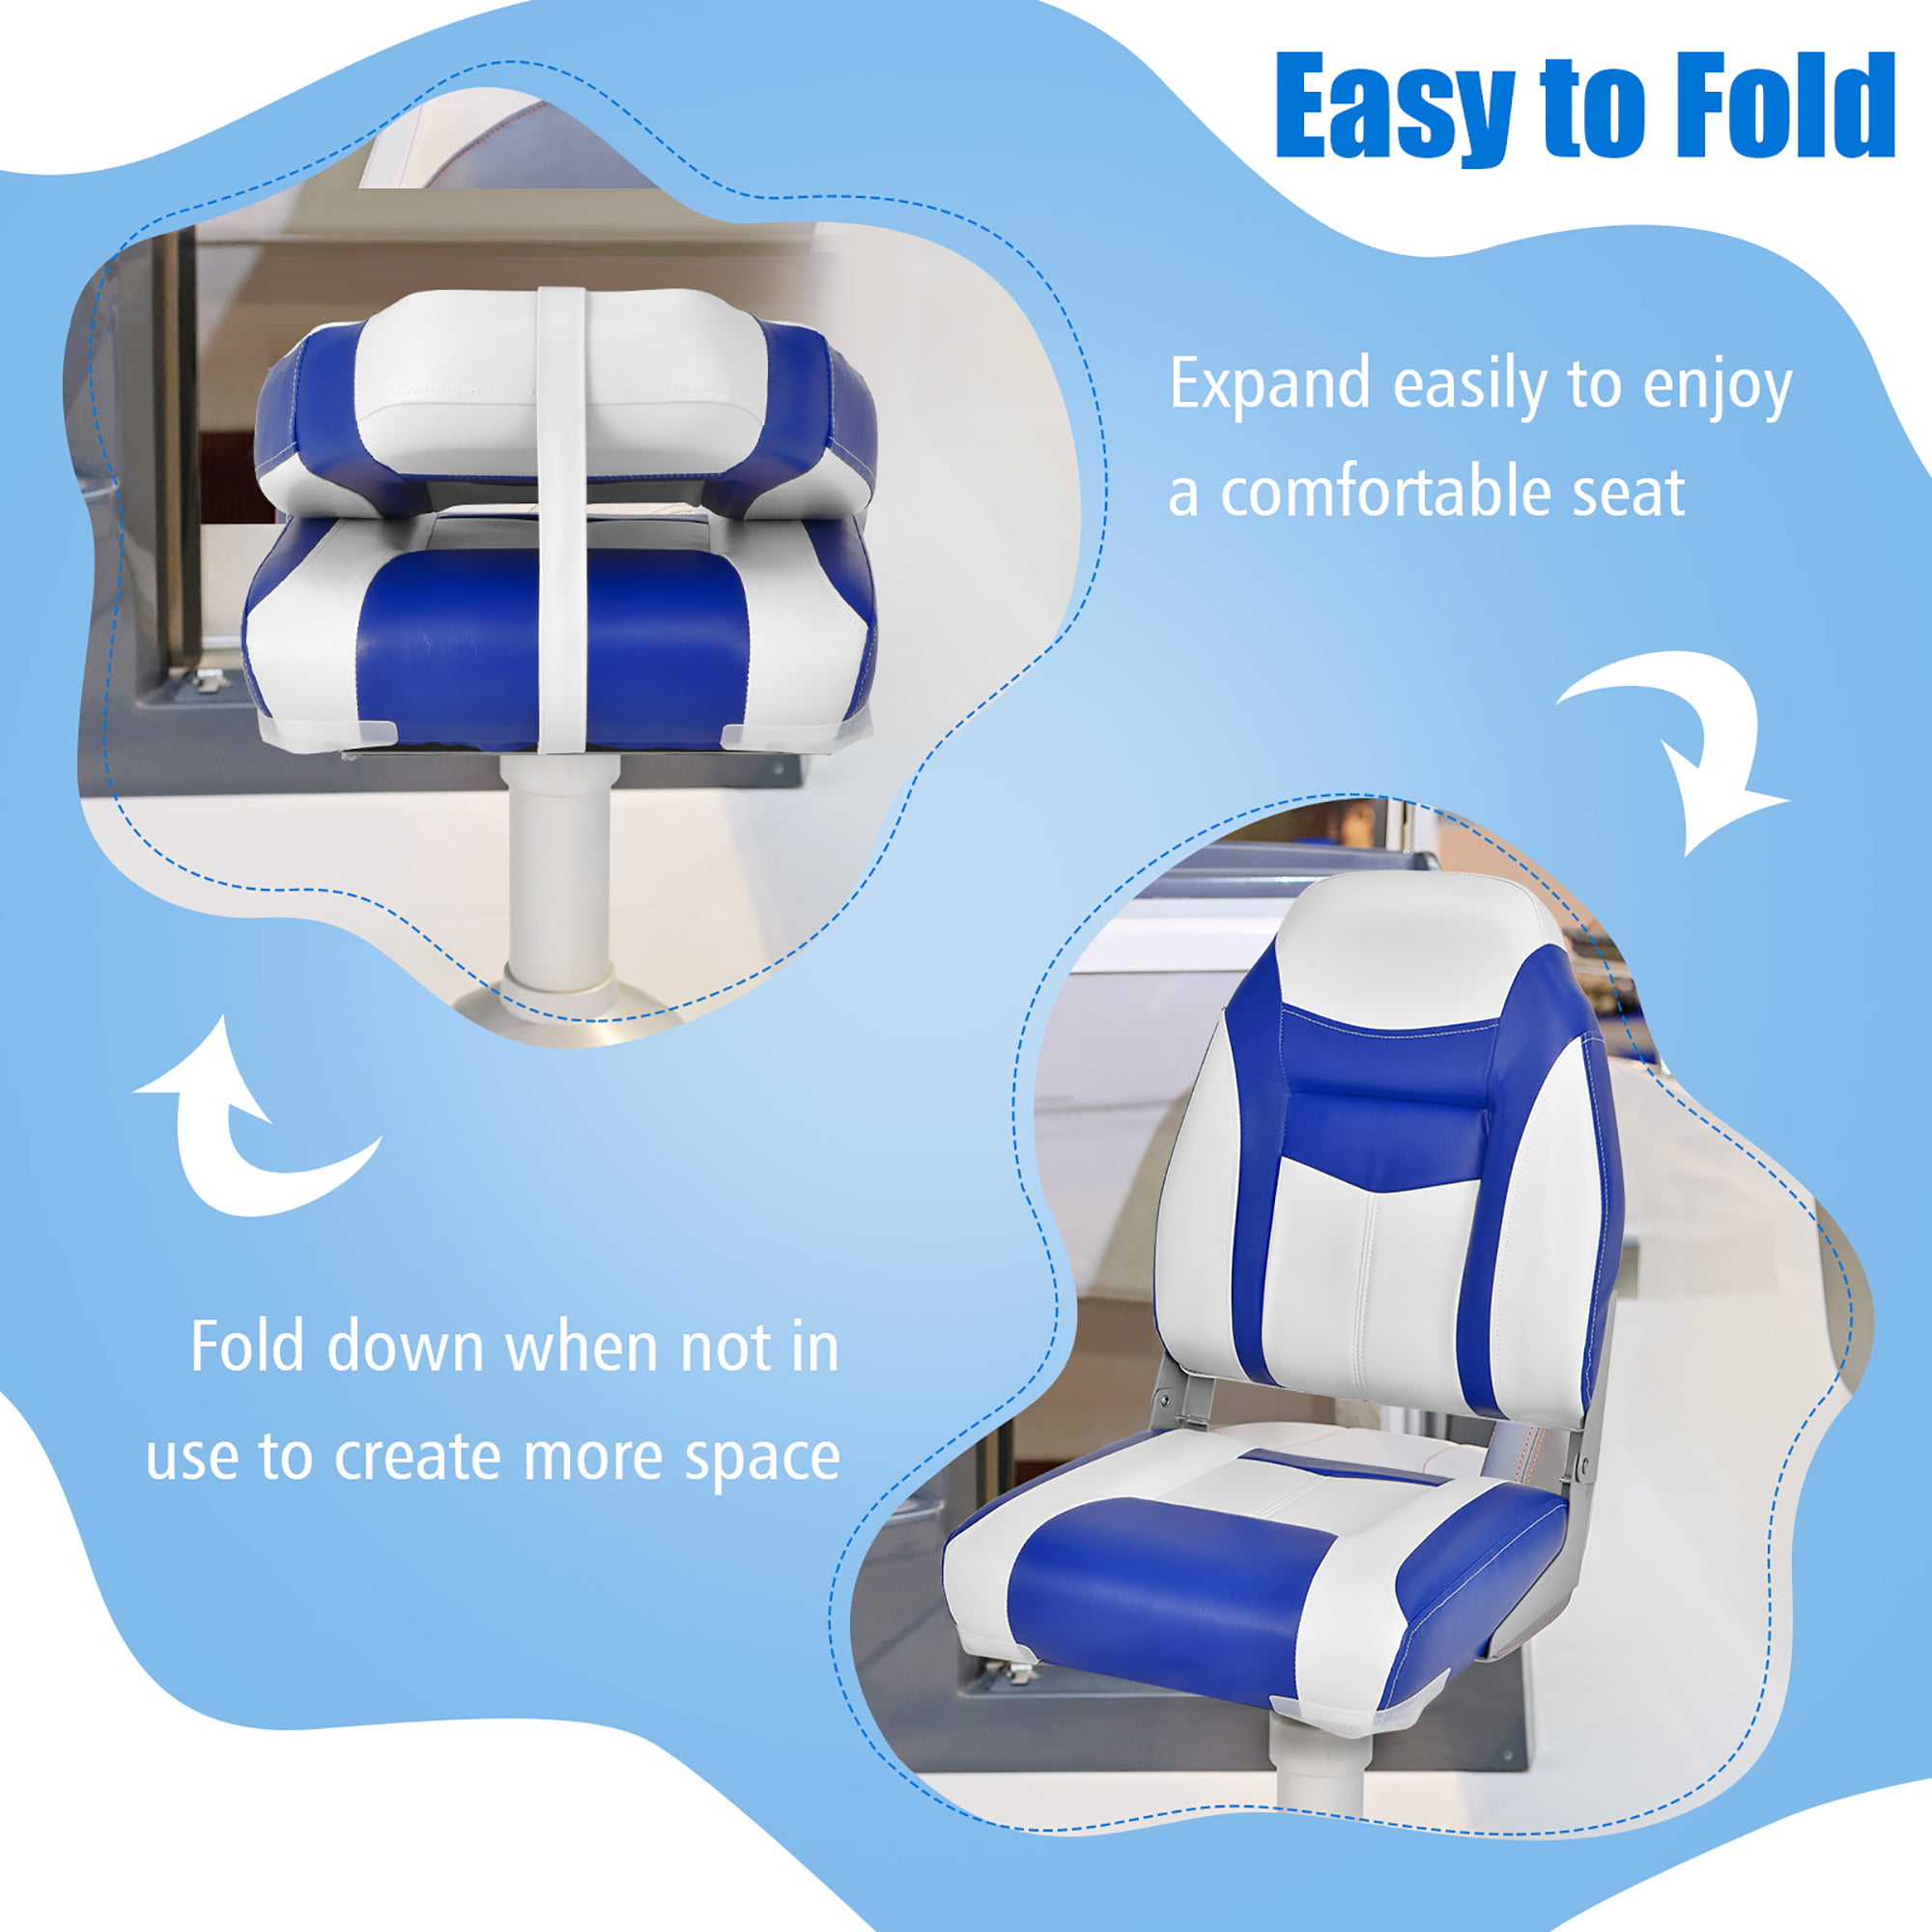 Costway High Back Folding Boat Seats w/ Blue White Sponge Cushion